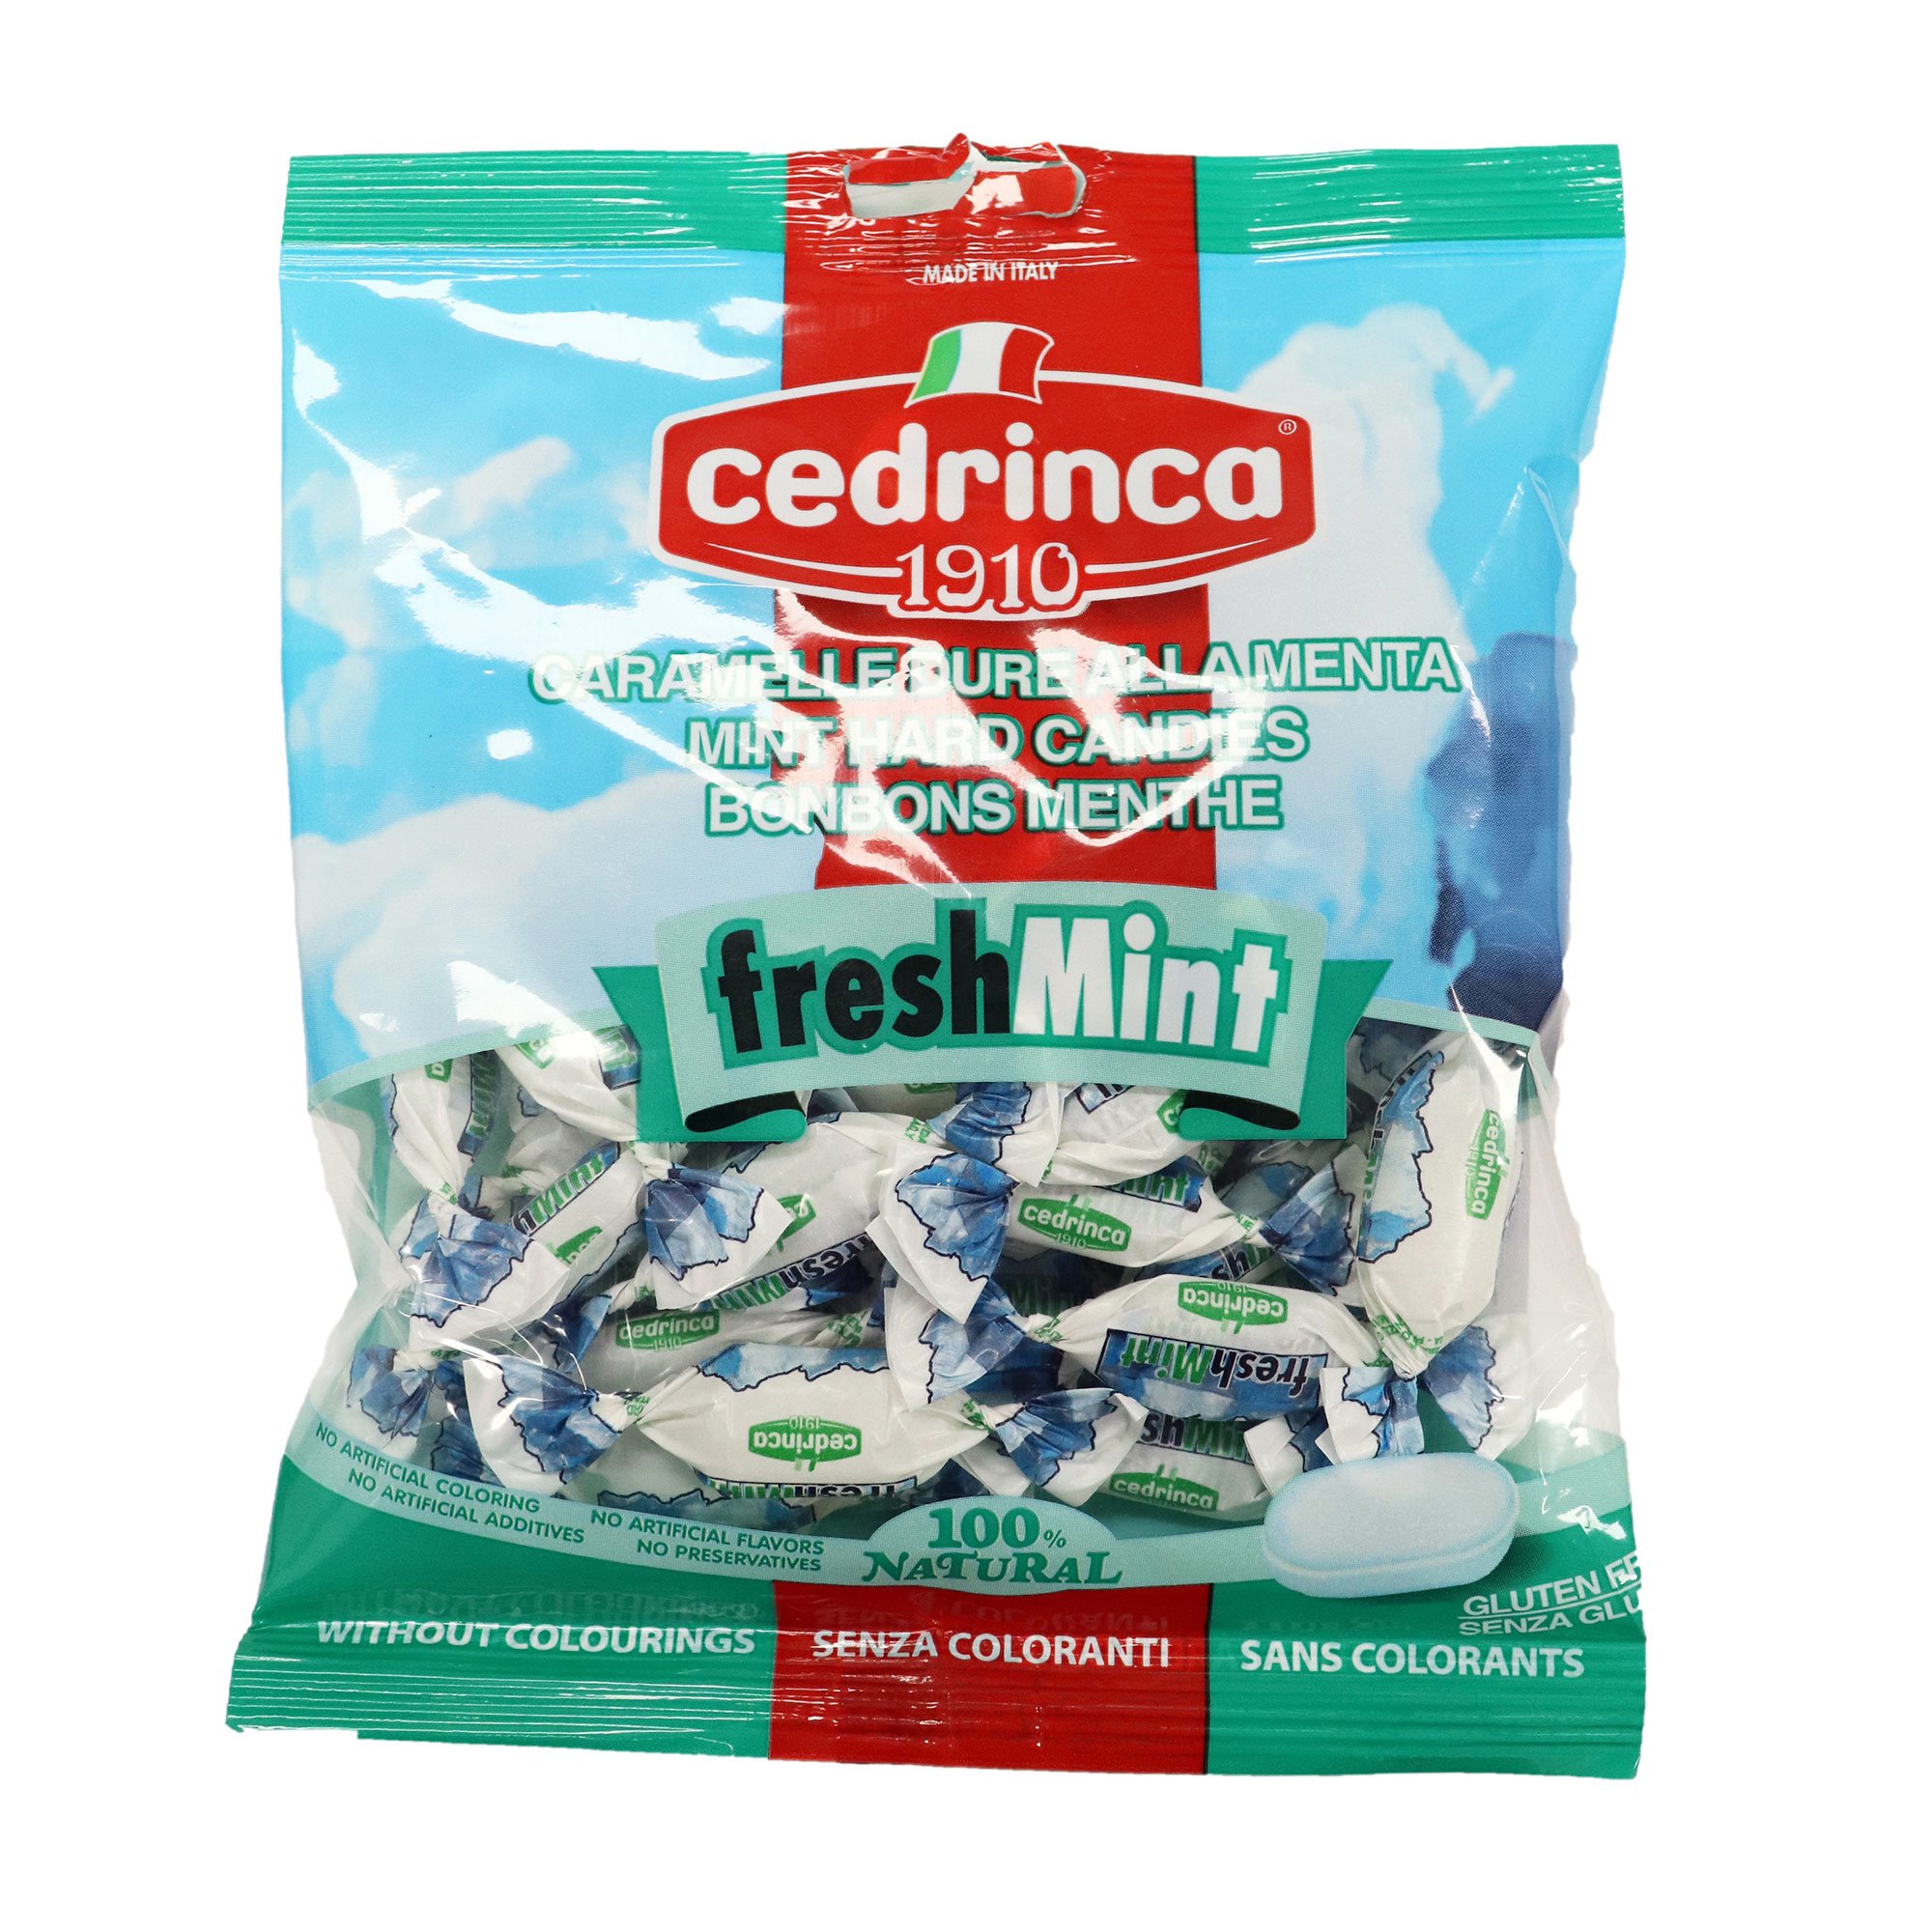 P6-Cedrinca-Freshmint.jpg